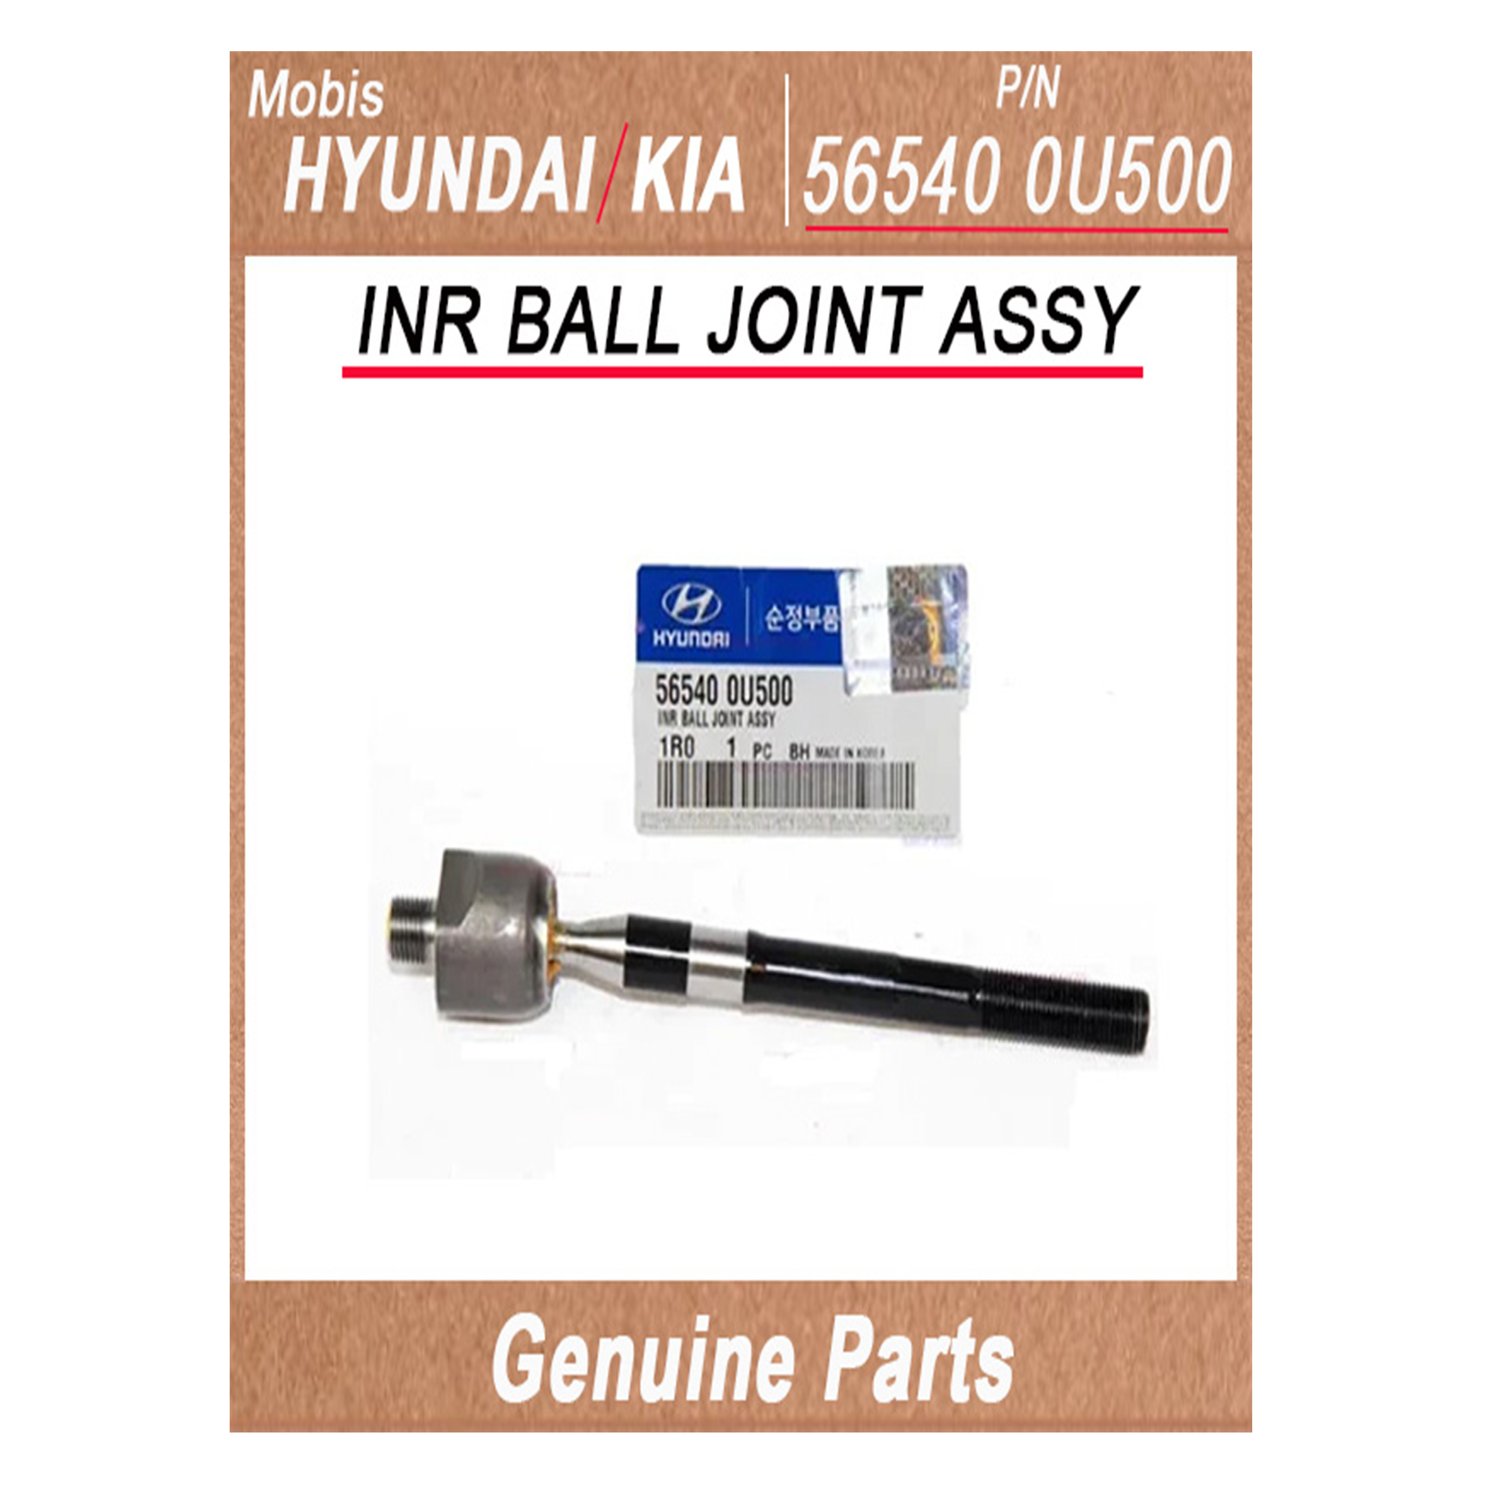 565400U500 _ INR BALL JOINT ASSY _ Genuine Korean Automotive Spare Parts _ Hyundai Kia _Mobis_